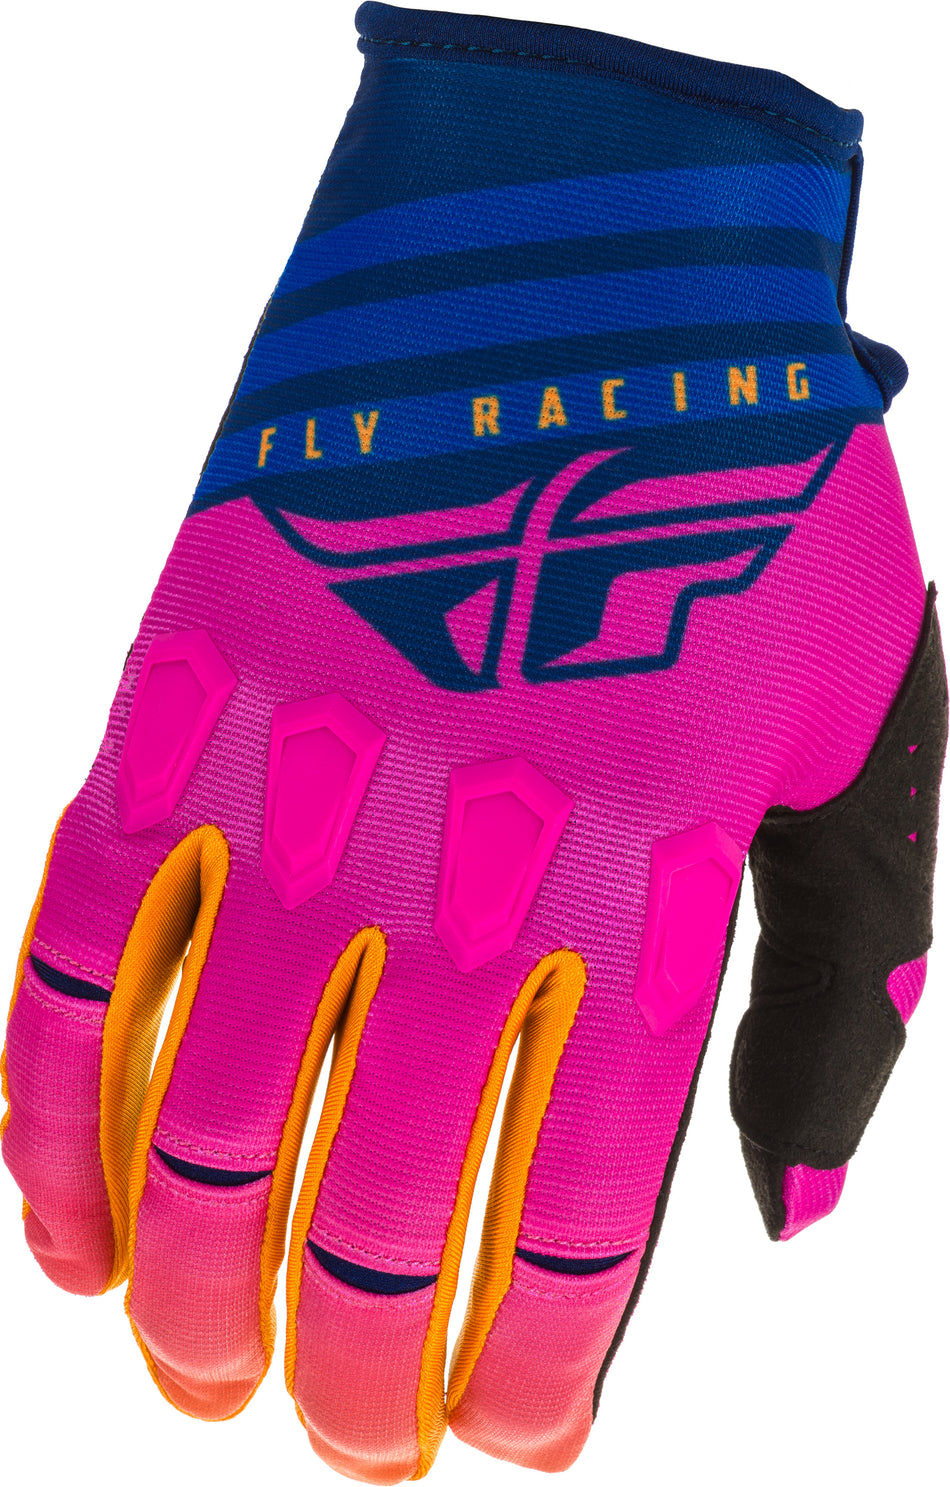 FLY RACING Kinetic K220 Gloves Midnight/Blue/Orange Sz 13 373-51913